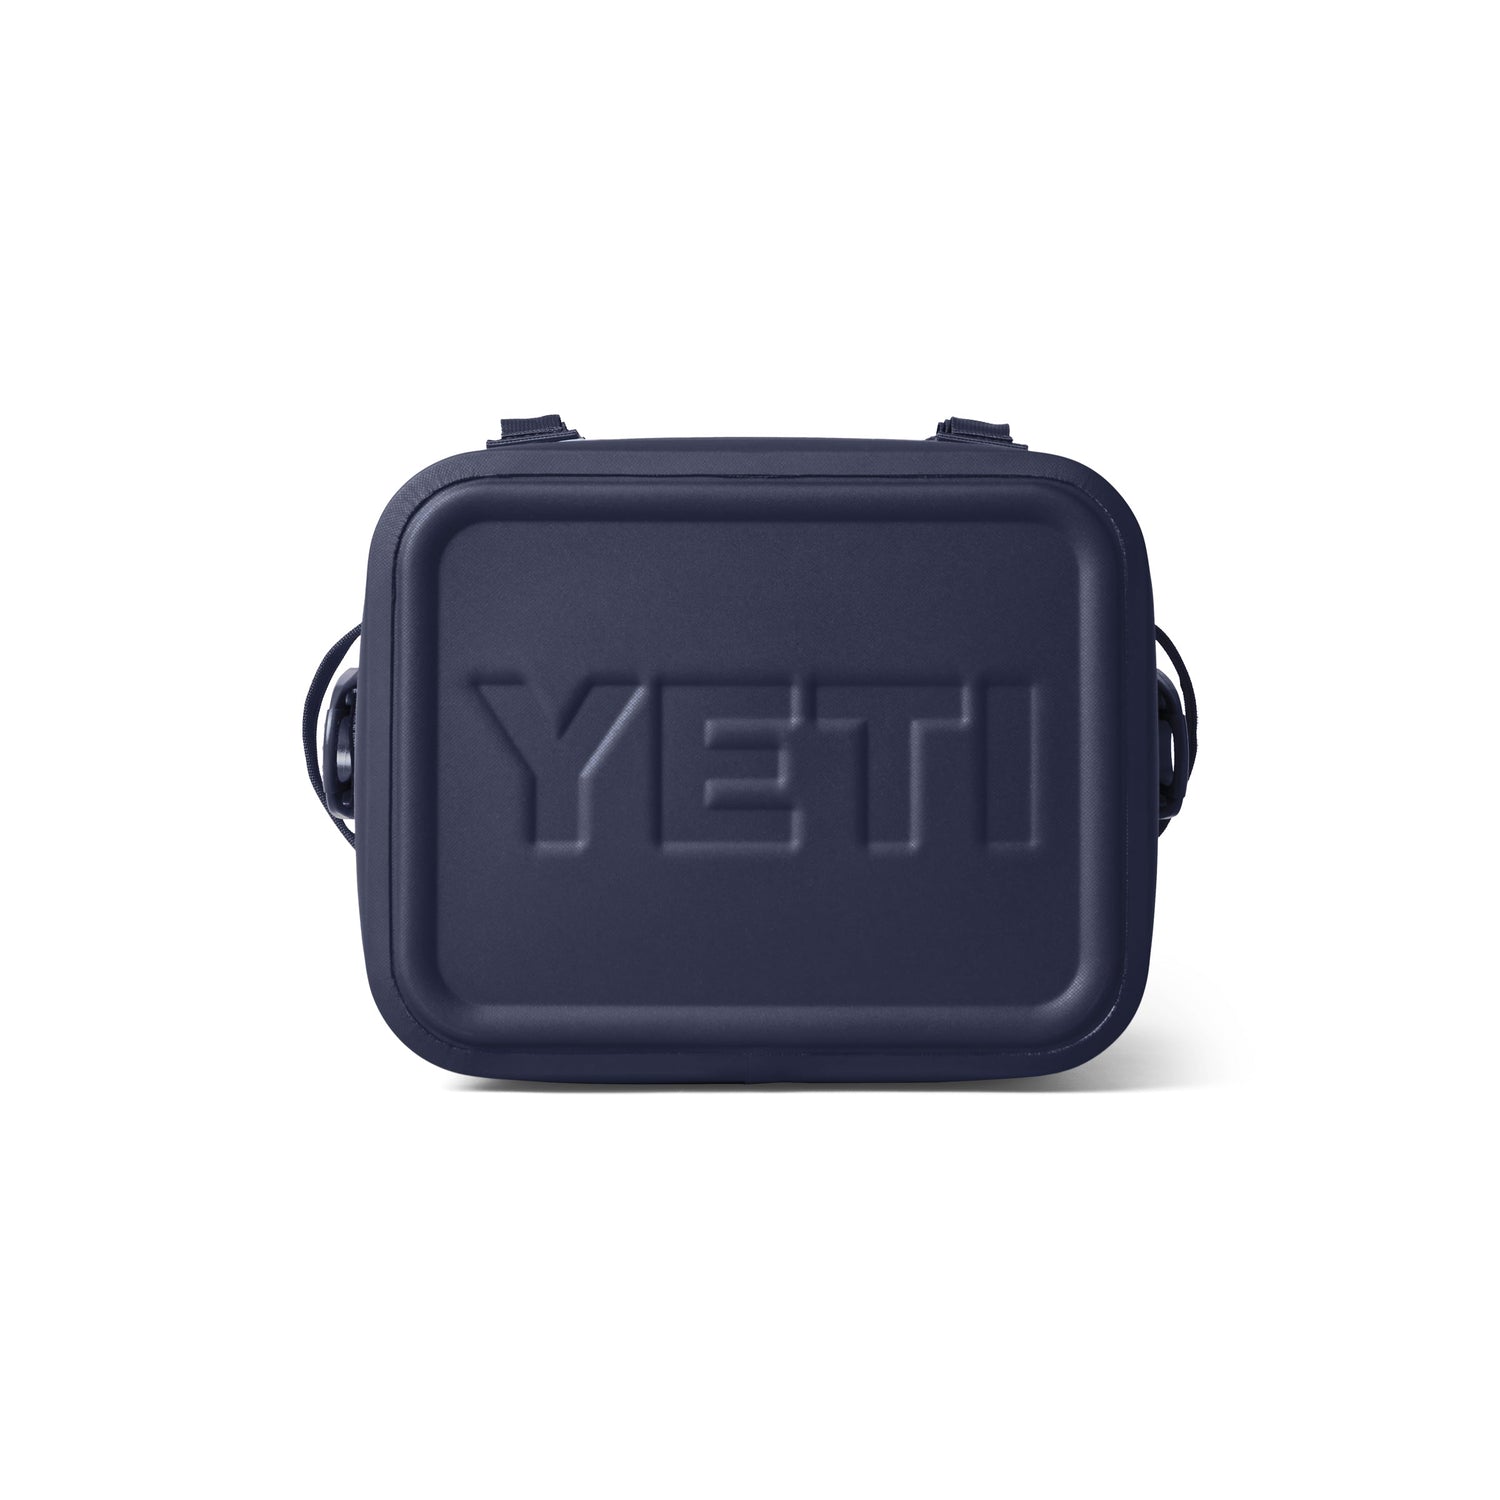 Yeti Hopper Flip 12 Soft Cooler-Coolers & Drinkware-Yeti-Charcoal-Fishing Station